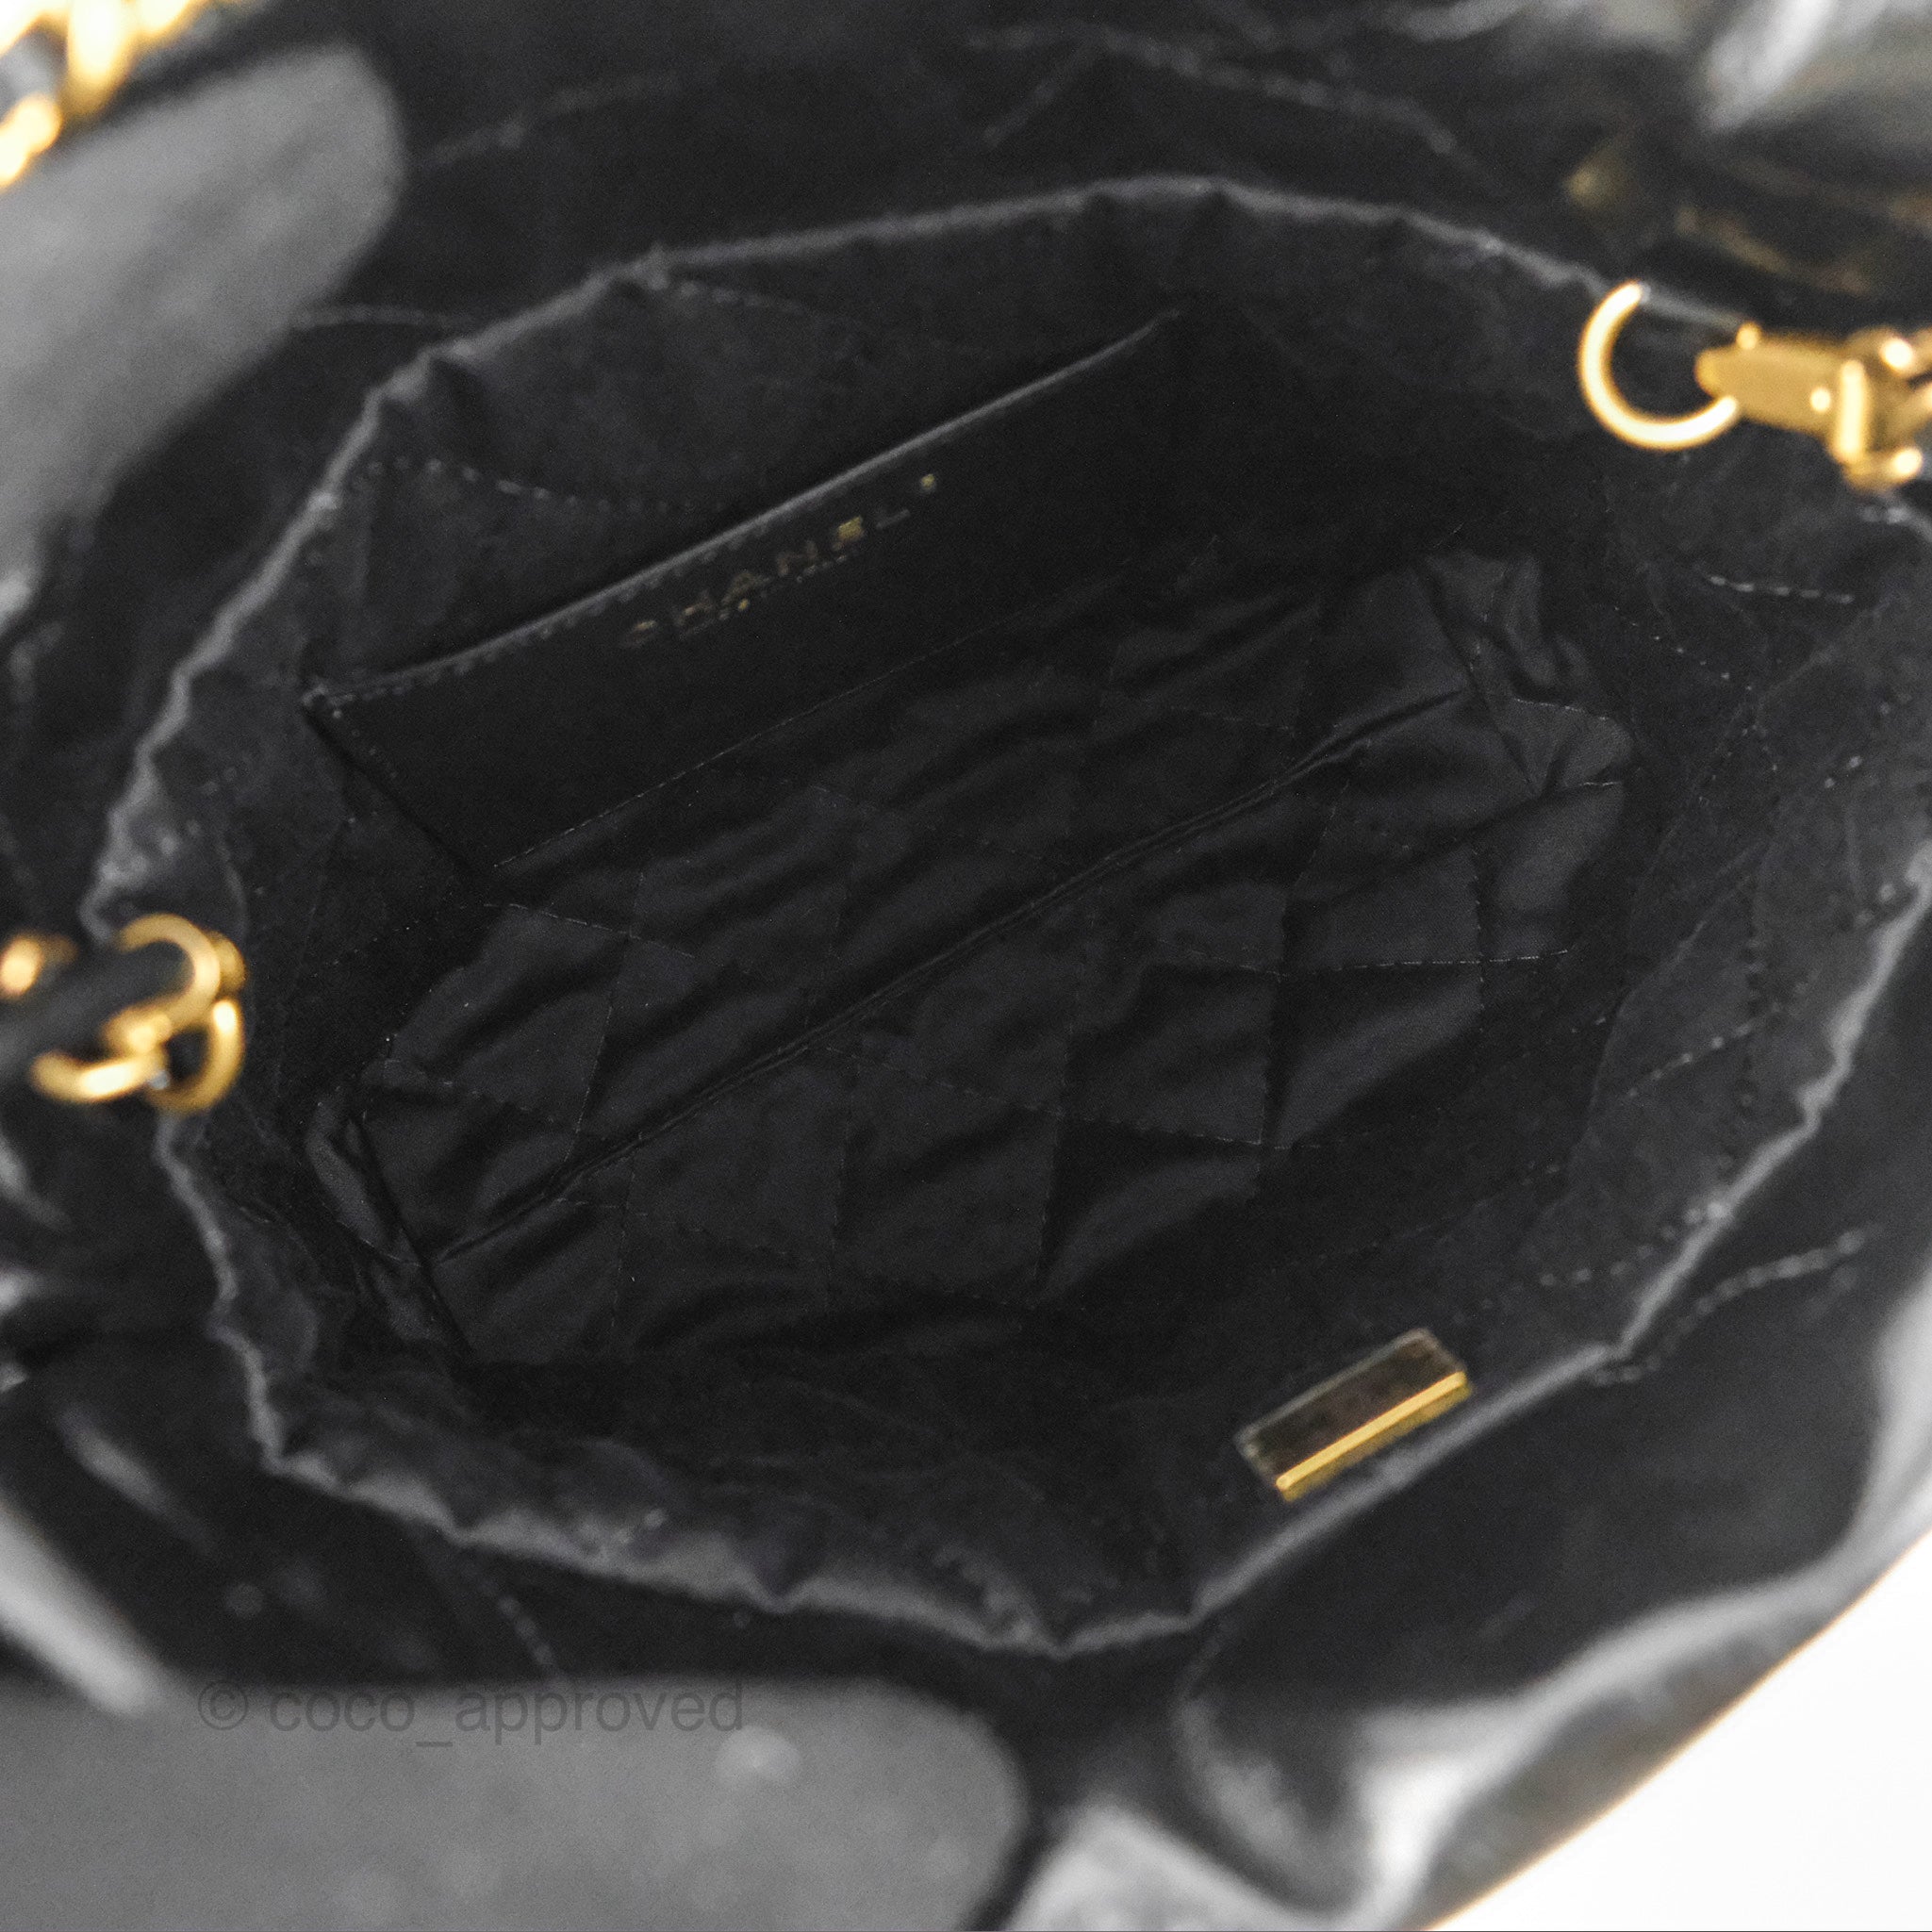 Chanel 22 Handbag Mini 23S Shiny Crumpled Calfskin Black with Pearl Chain  in Shiny Crumpled Calfskin with Gold-Tone - JP